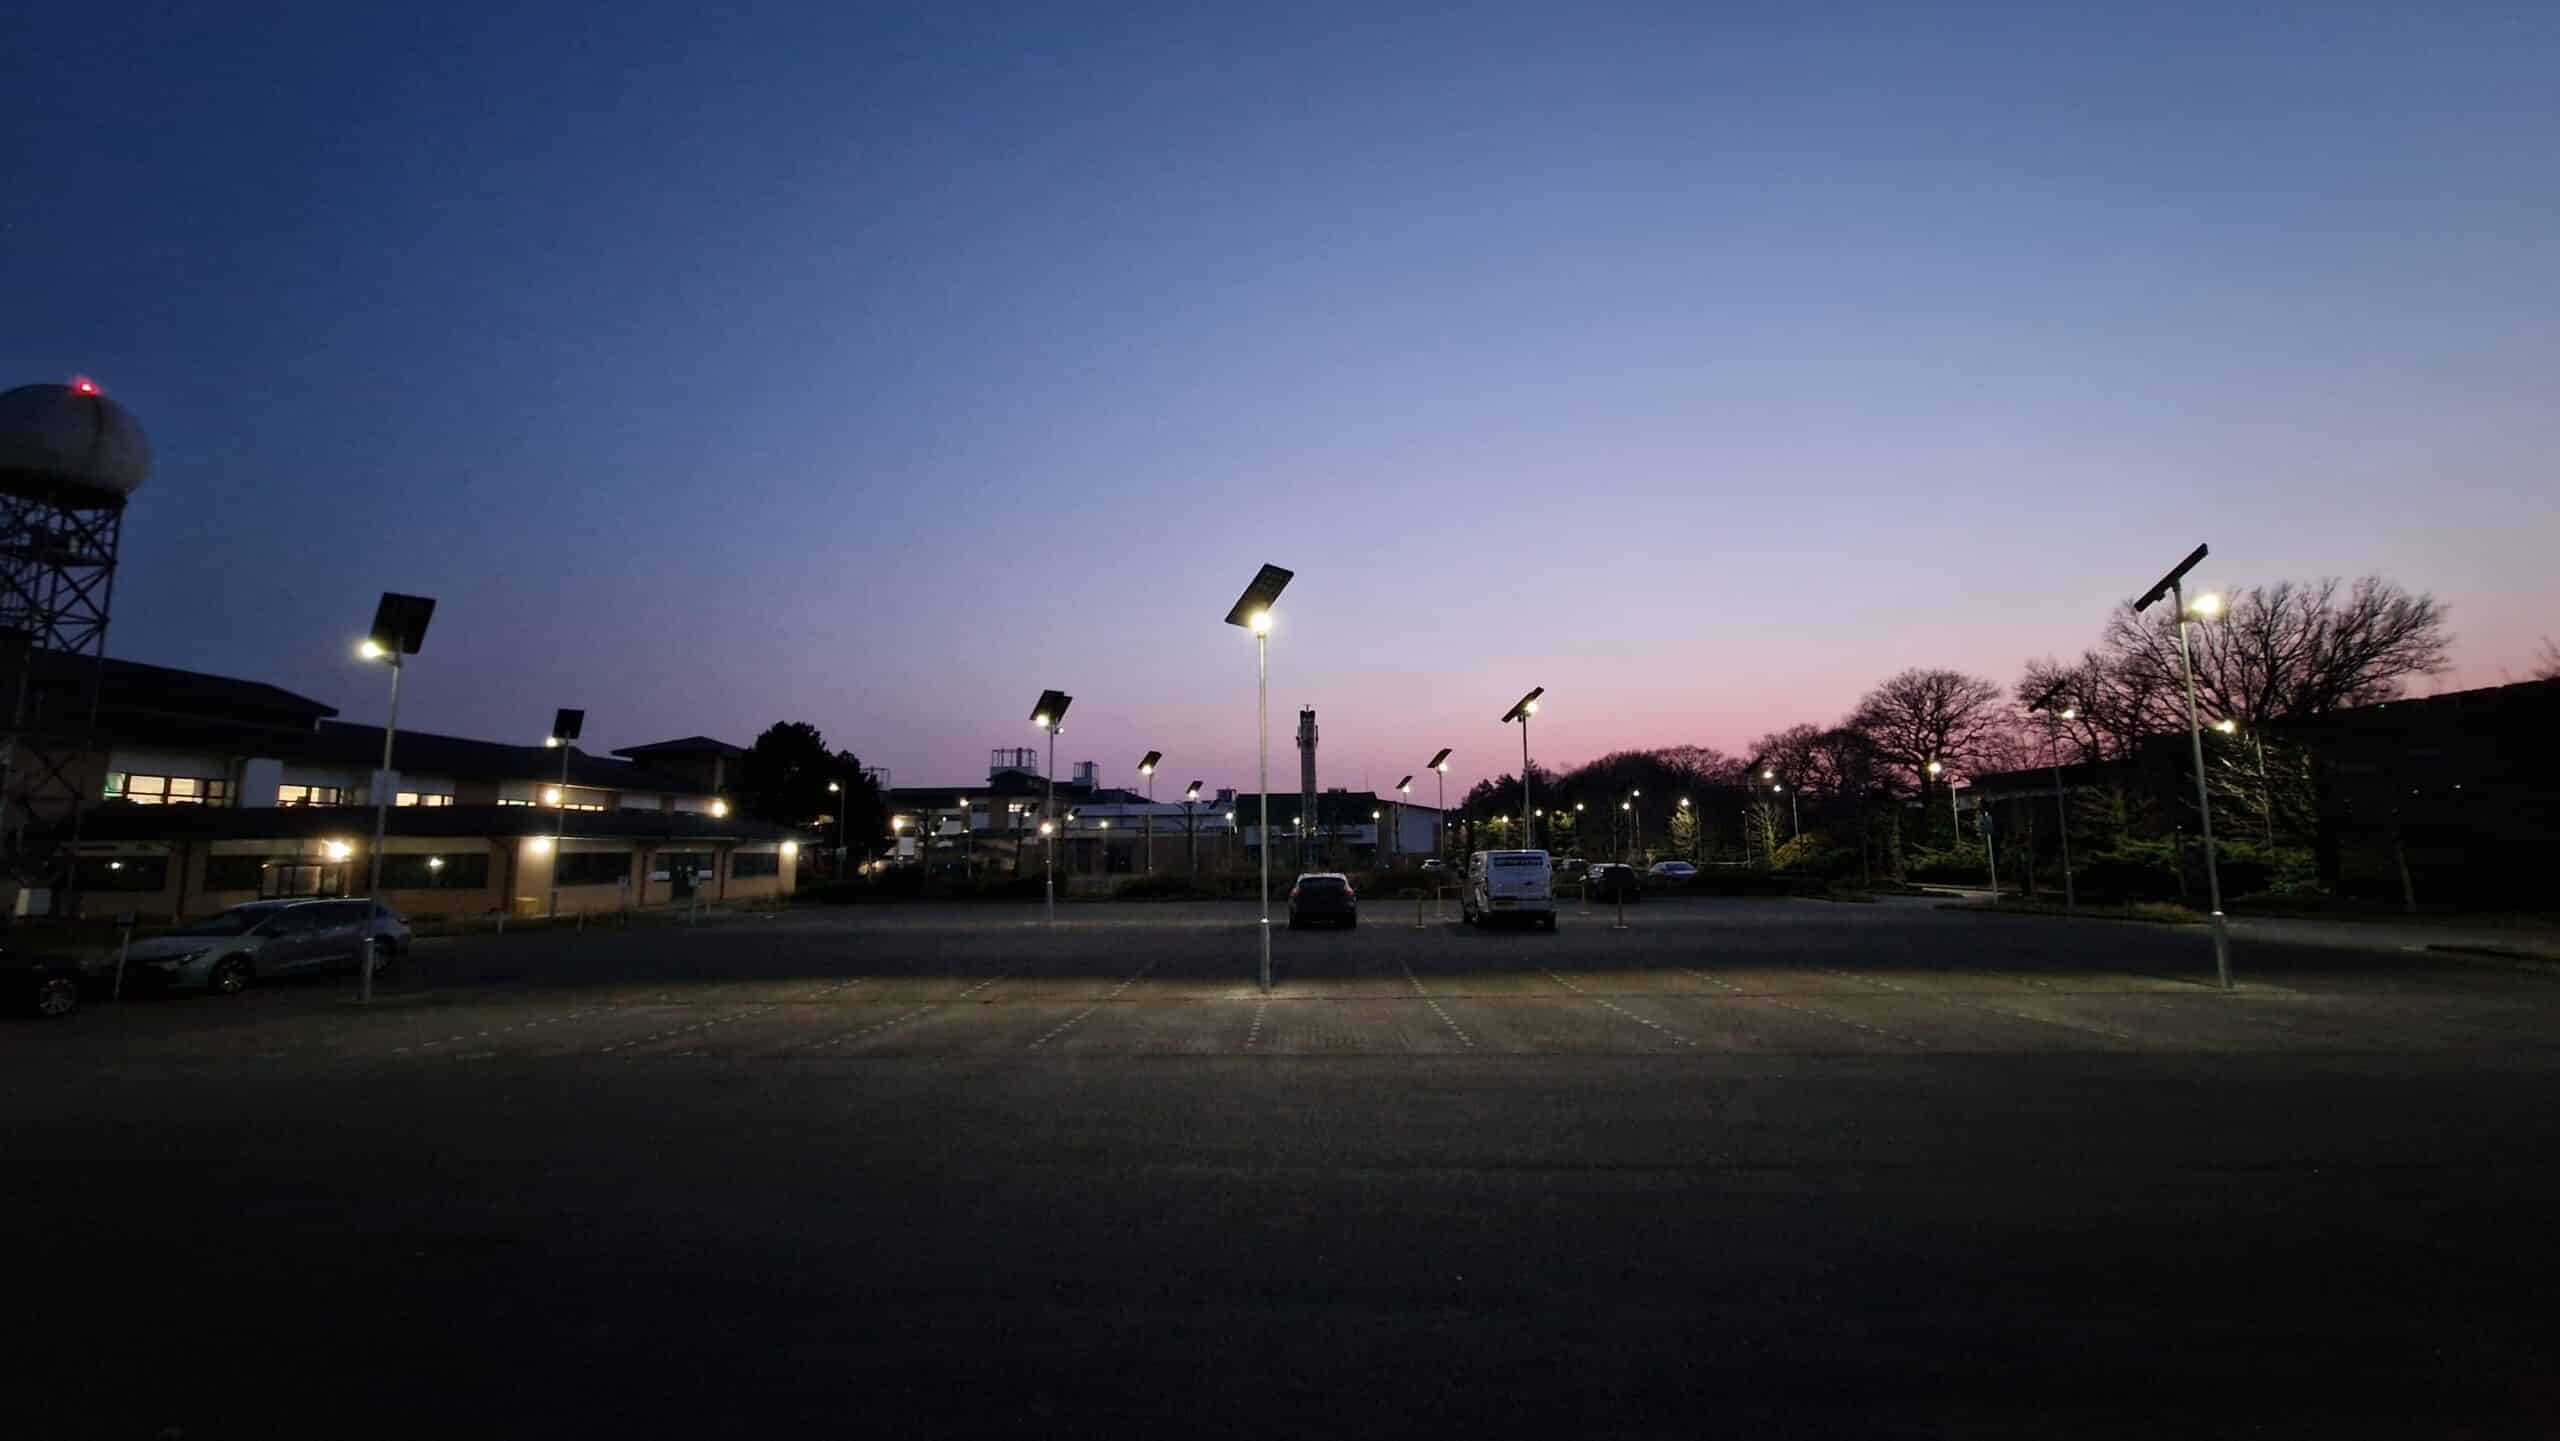 Car park at night with solar street lights